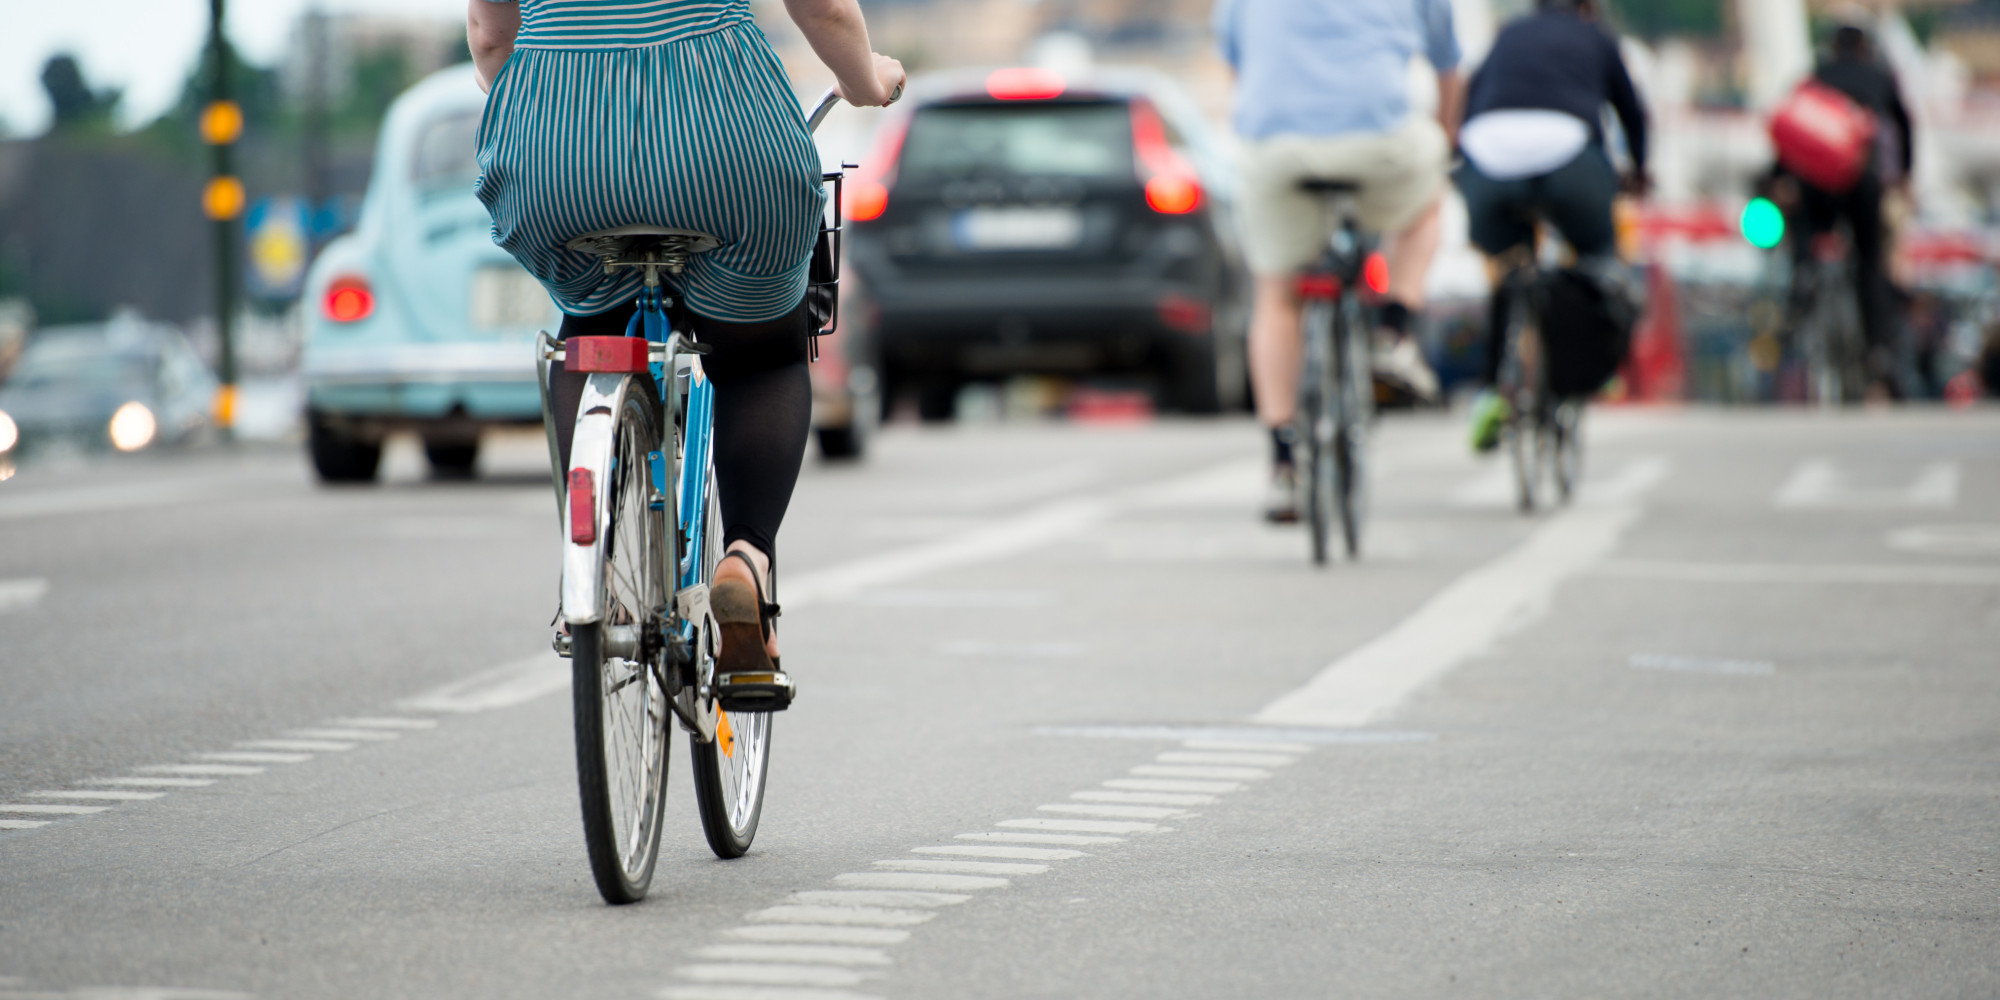 More information about "Πρόστιμα και πινακίδες για τους ποδηλάτες: Τι προβλέπει το νομοσχέδιο του υπουργείου Μεταφορών"